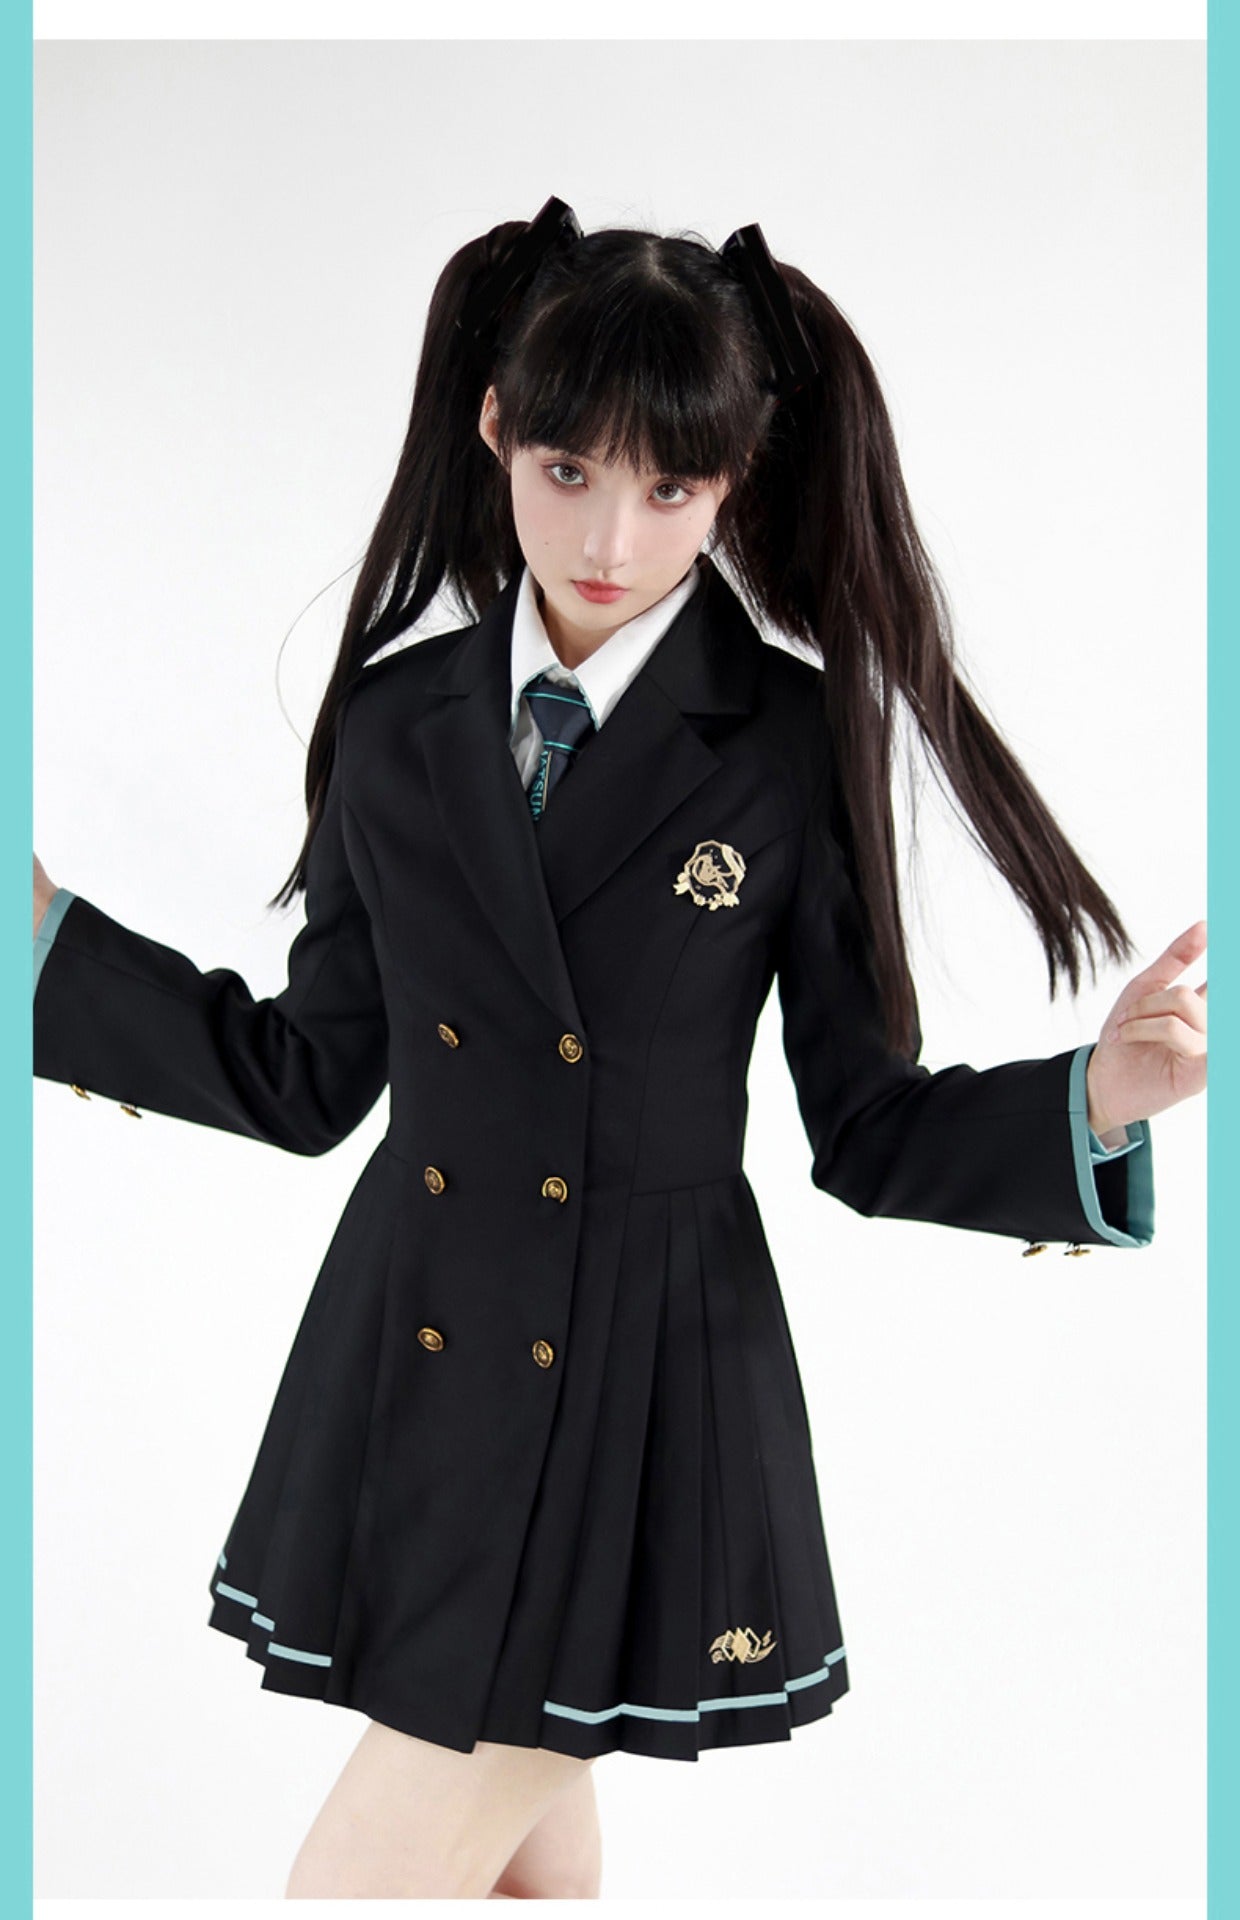 Premium Photo | Anime Concept Male Short Casual School Uniform With a Blazer  Mix of Preppy Turnaround Art Fashion